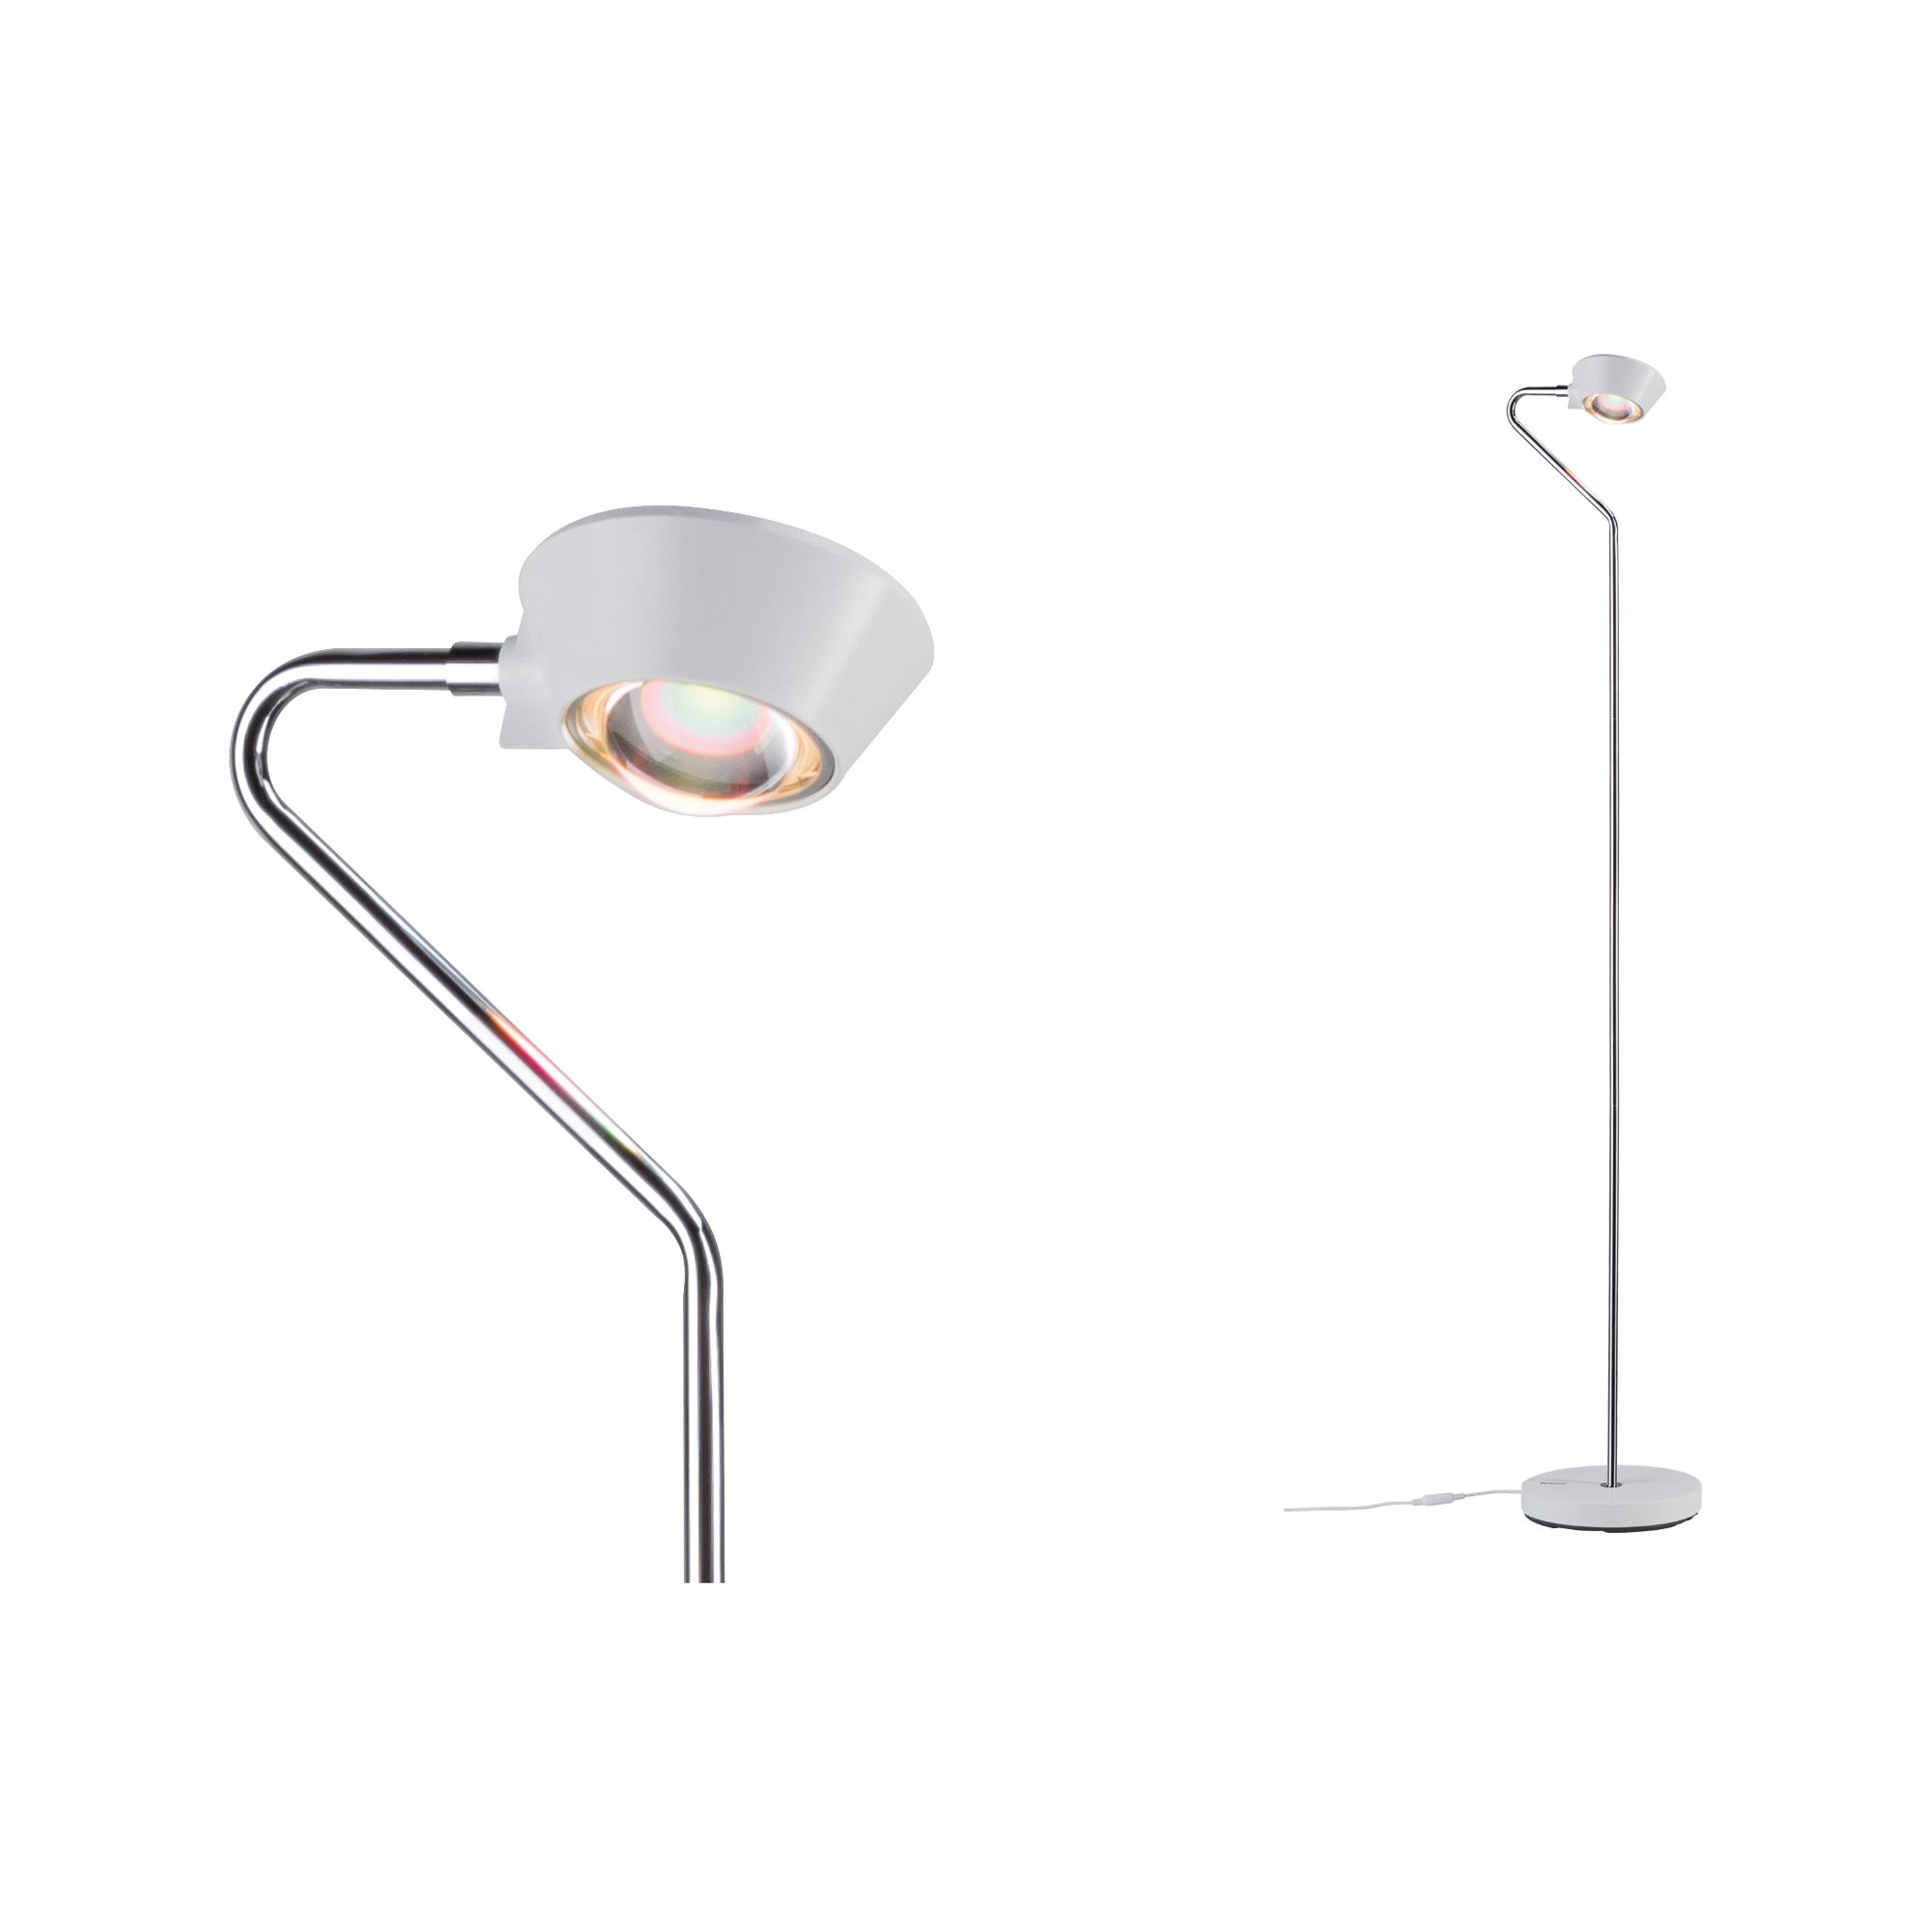 PAULMANN - LED stojací lampa Ramos 13W bílá mat/chrom nožní stmívač, P 70920